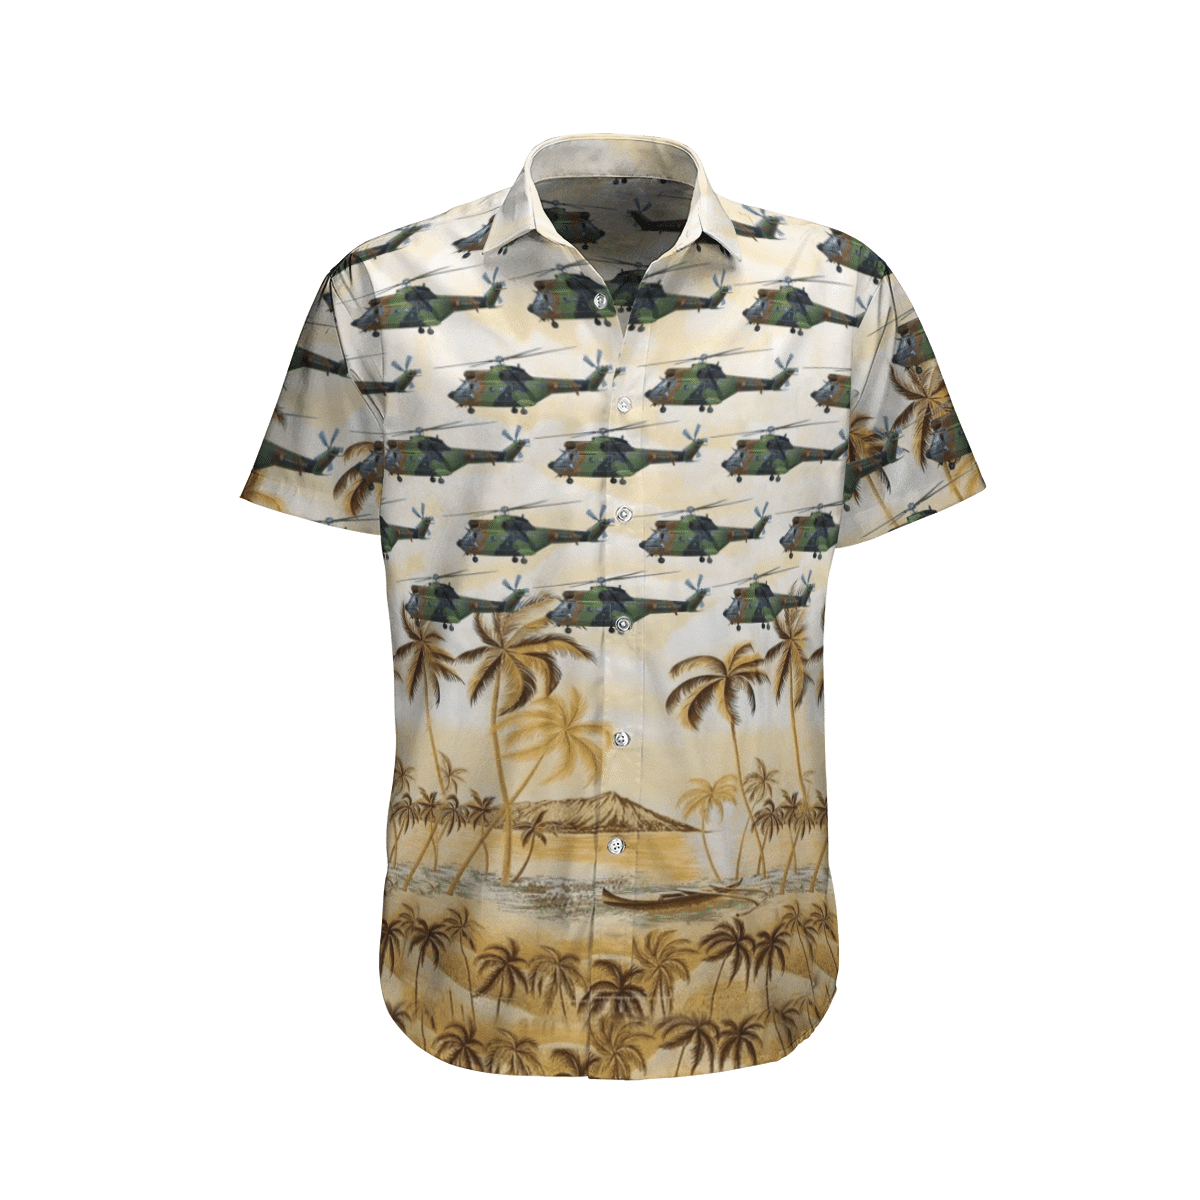 Get a new Hawaiian shirt to enjoy summer vacation 30